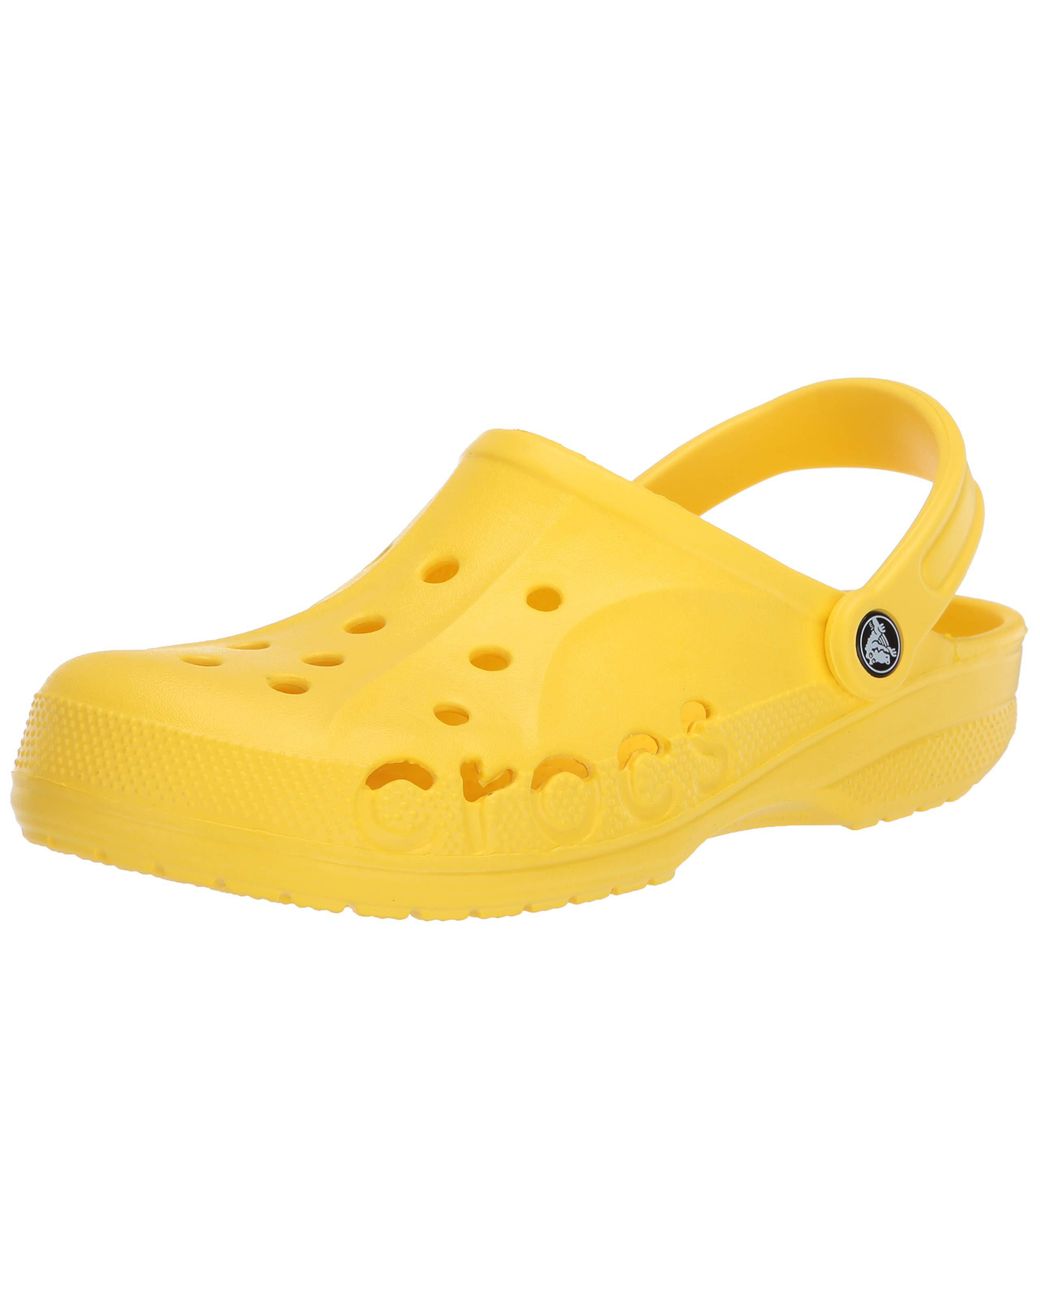 Crocs™ Baya Clog in Lemon (Yellow) - Save 50% - Lyst